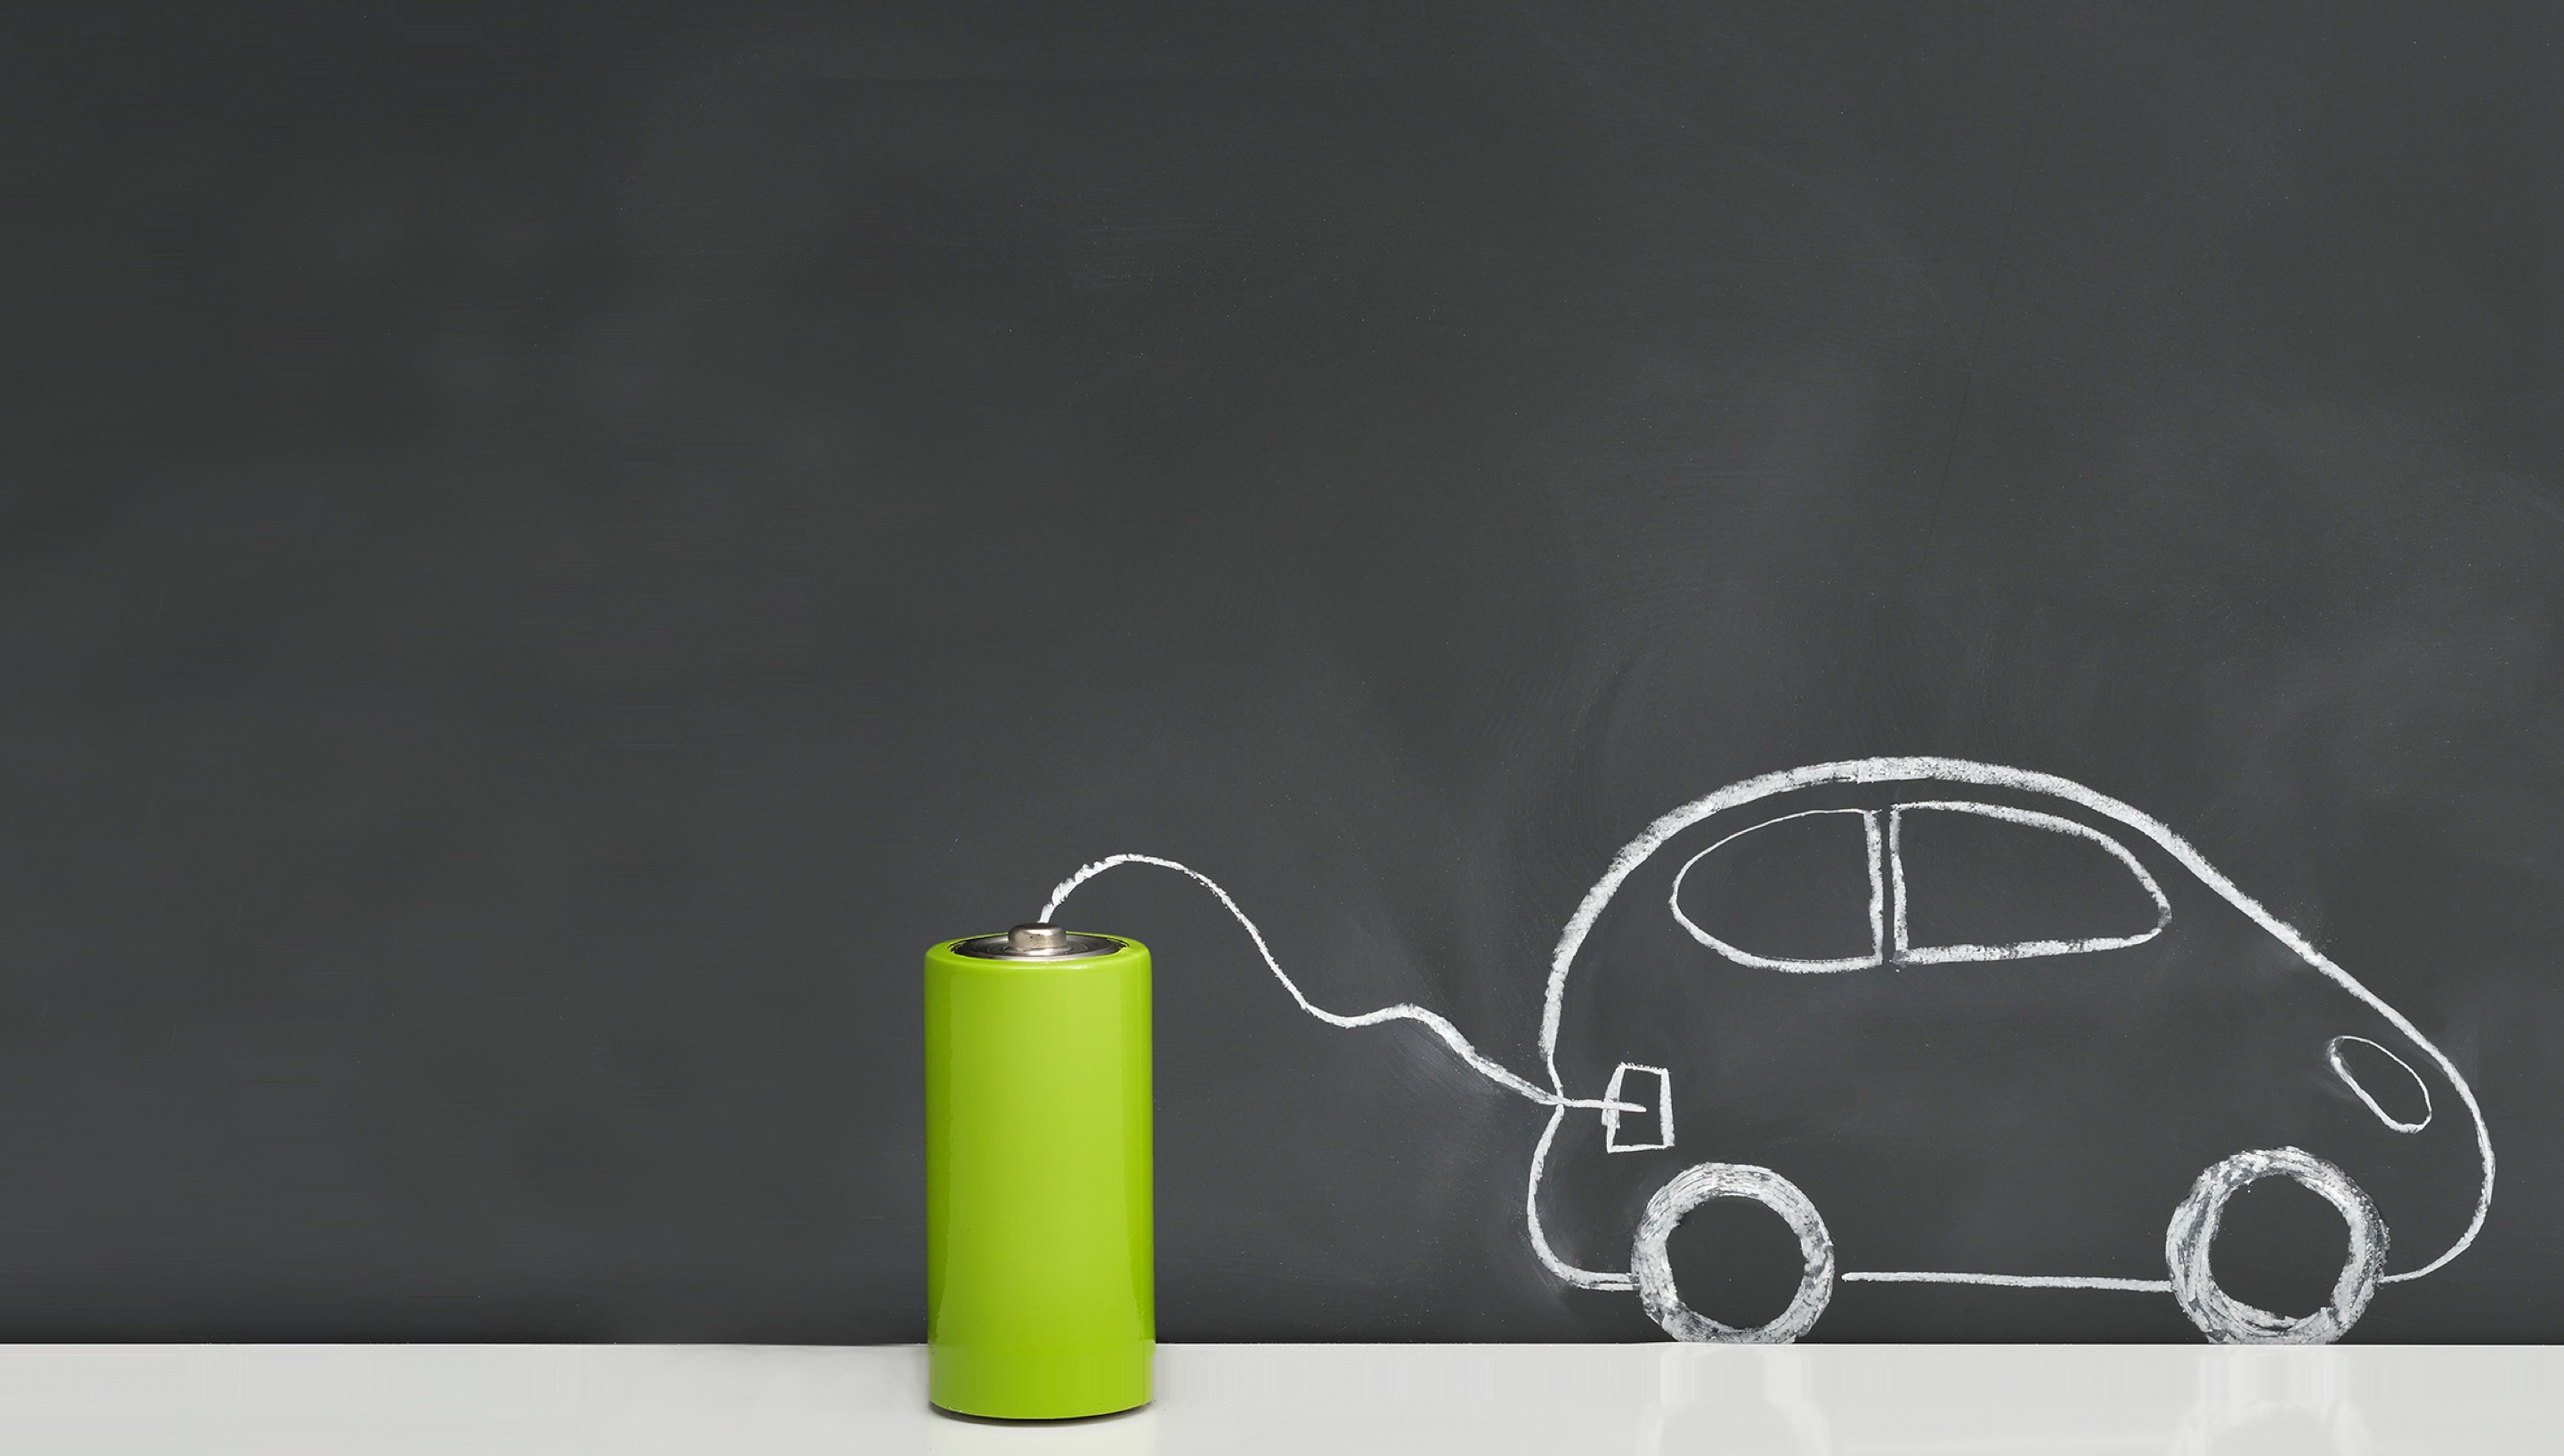 Electric vehicle recharging